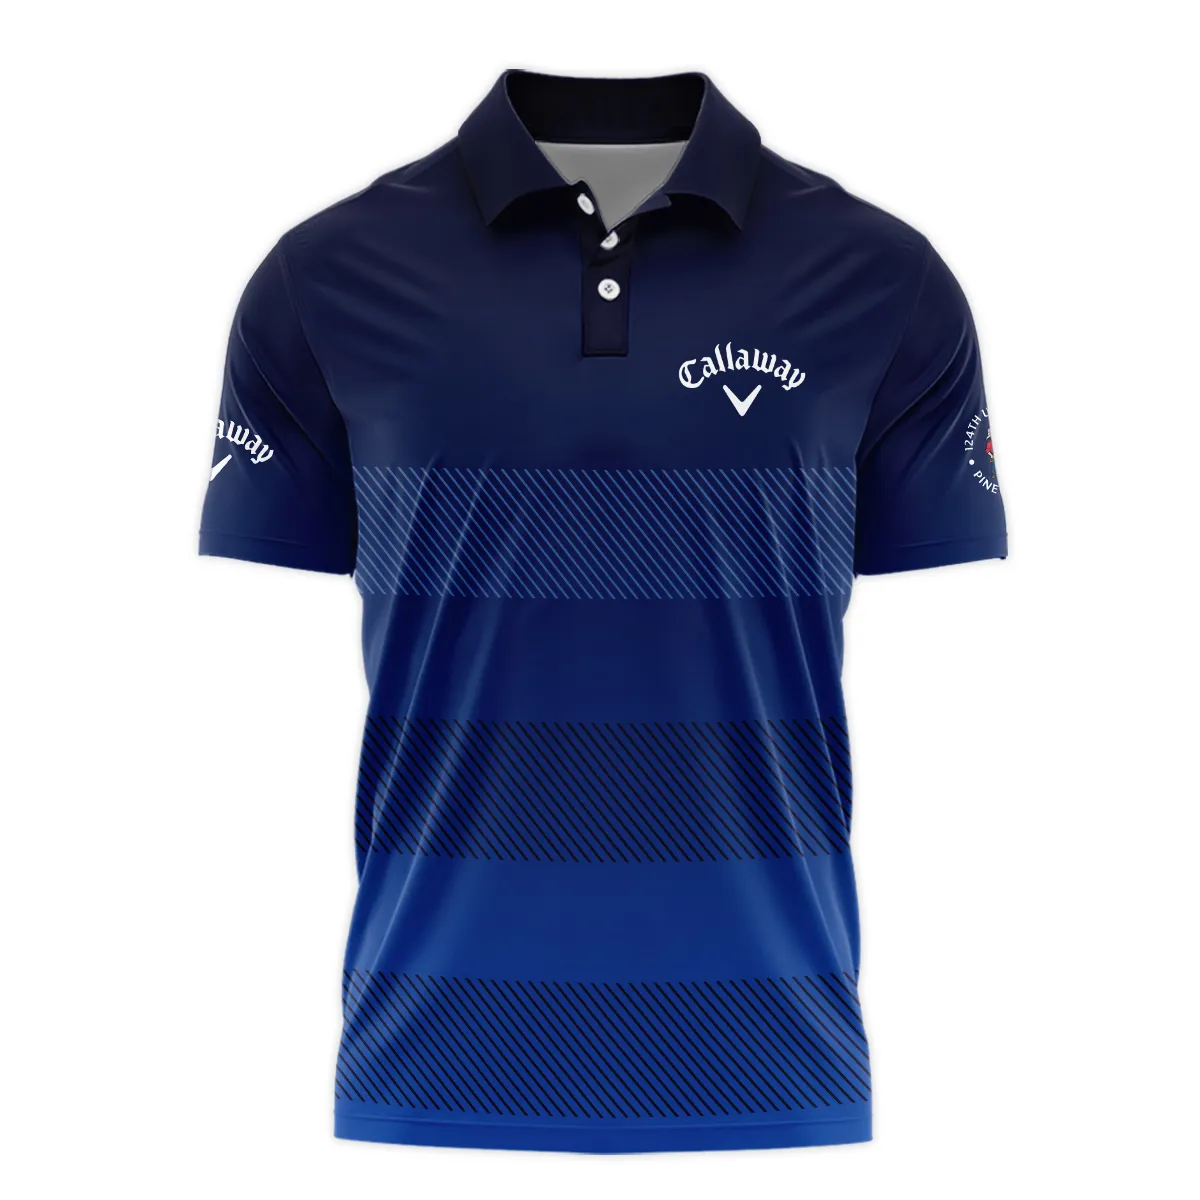 Callaway 124th U.S. Open Pinehurst Zipper Polo Shirt Sports Dark Blue Gradient Striped Pattern All Over Print Zipper Polo Shirt For Men